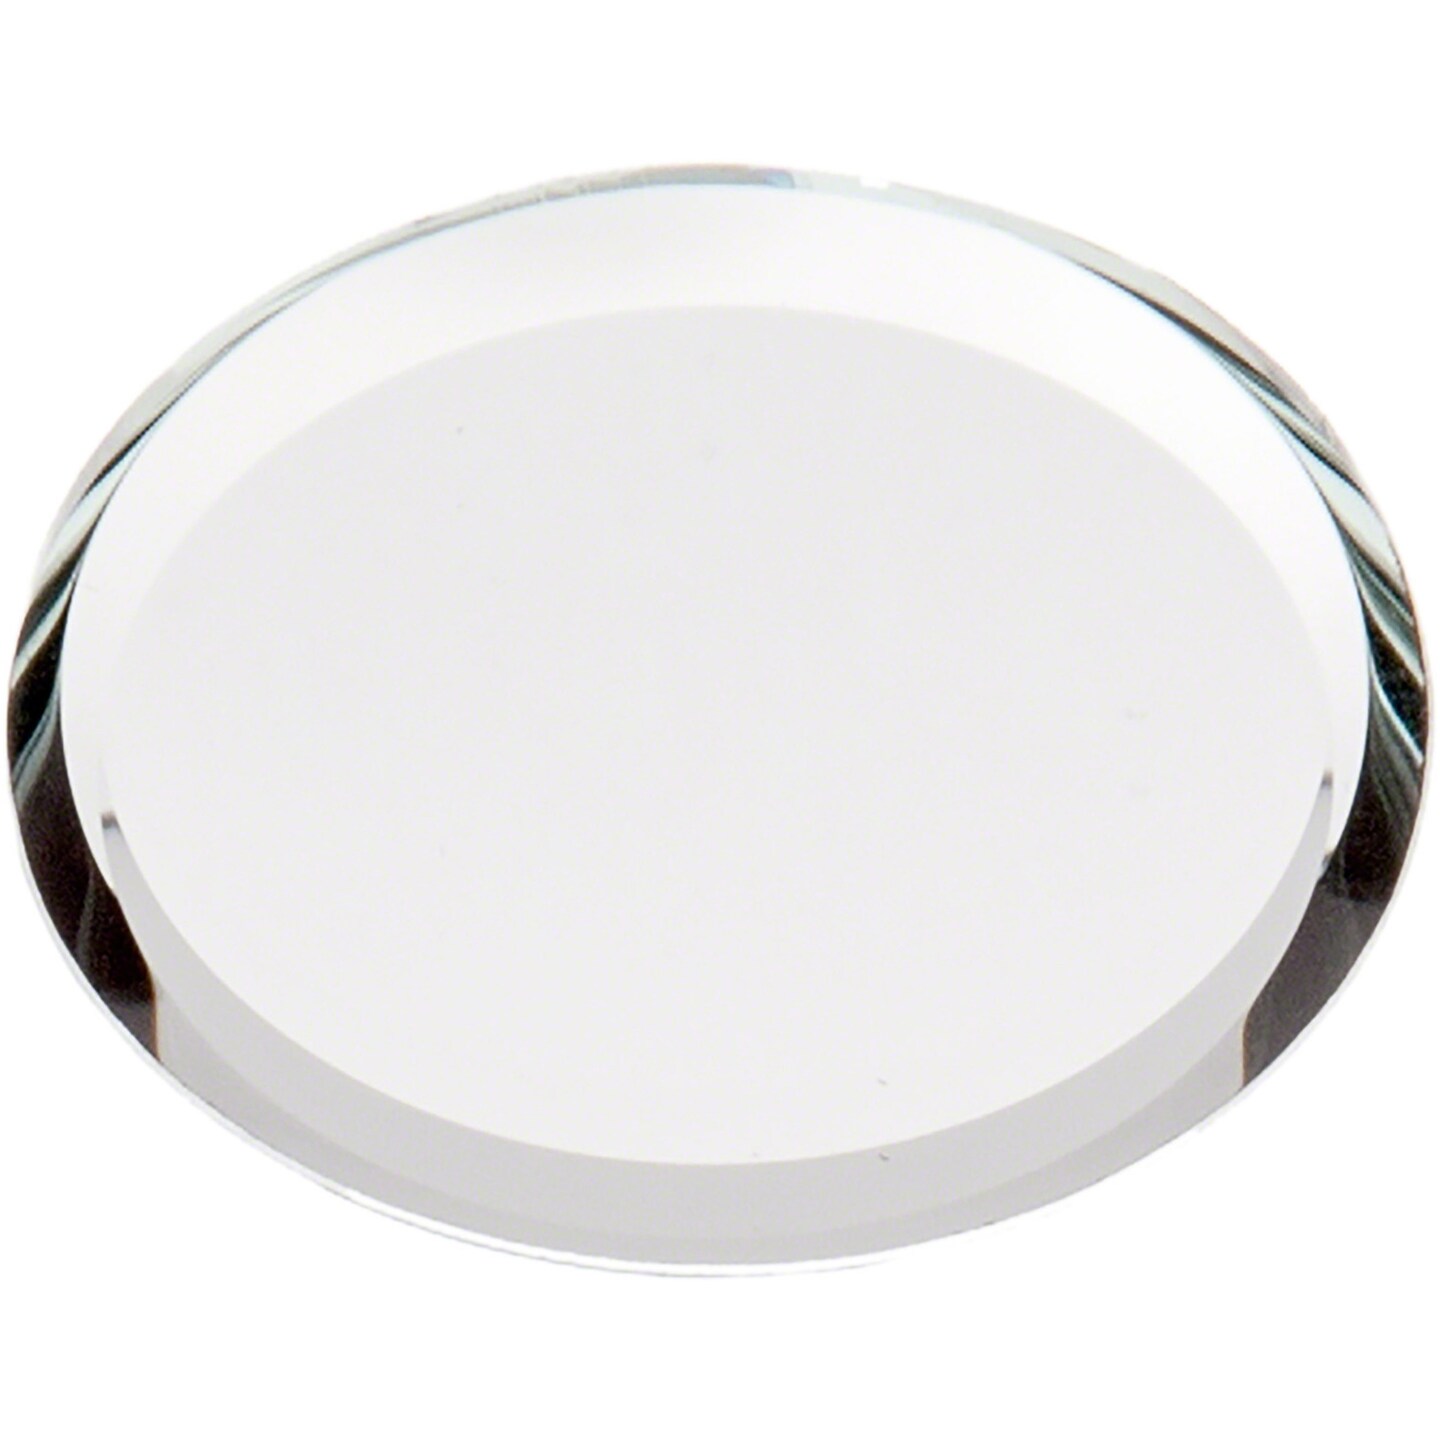 Plymor Round 3mm Beveled Glass Mirror, 1 inch x 1 inch